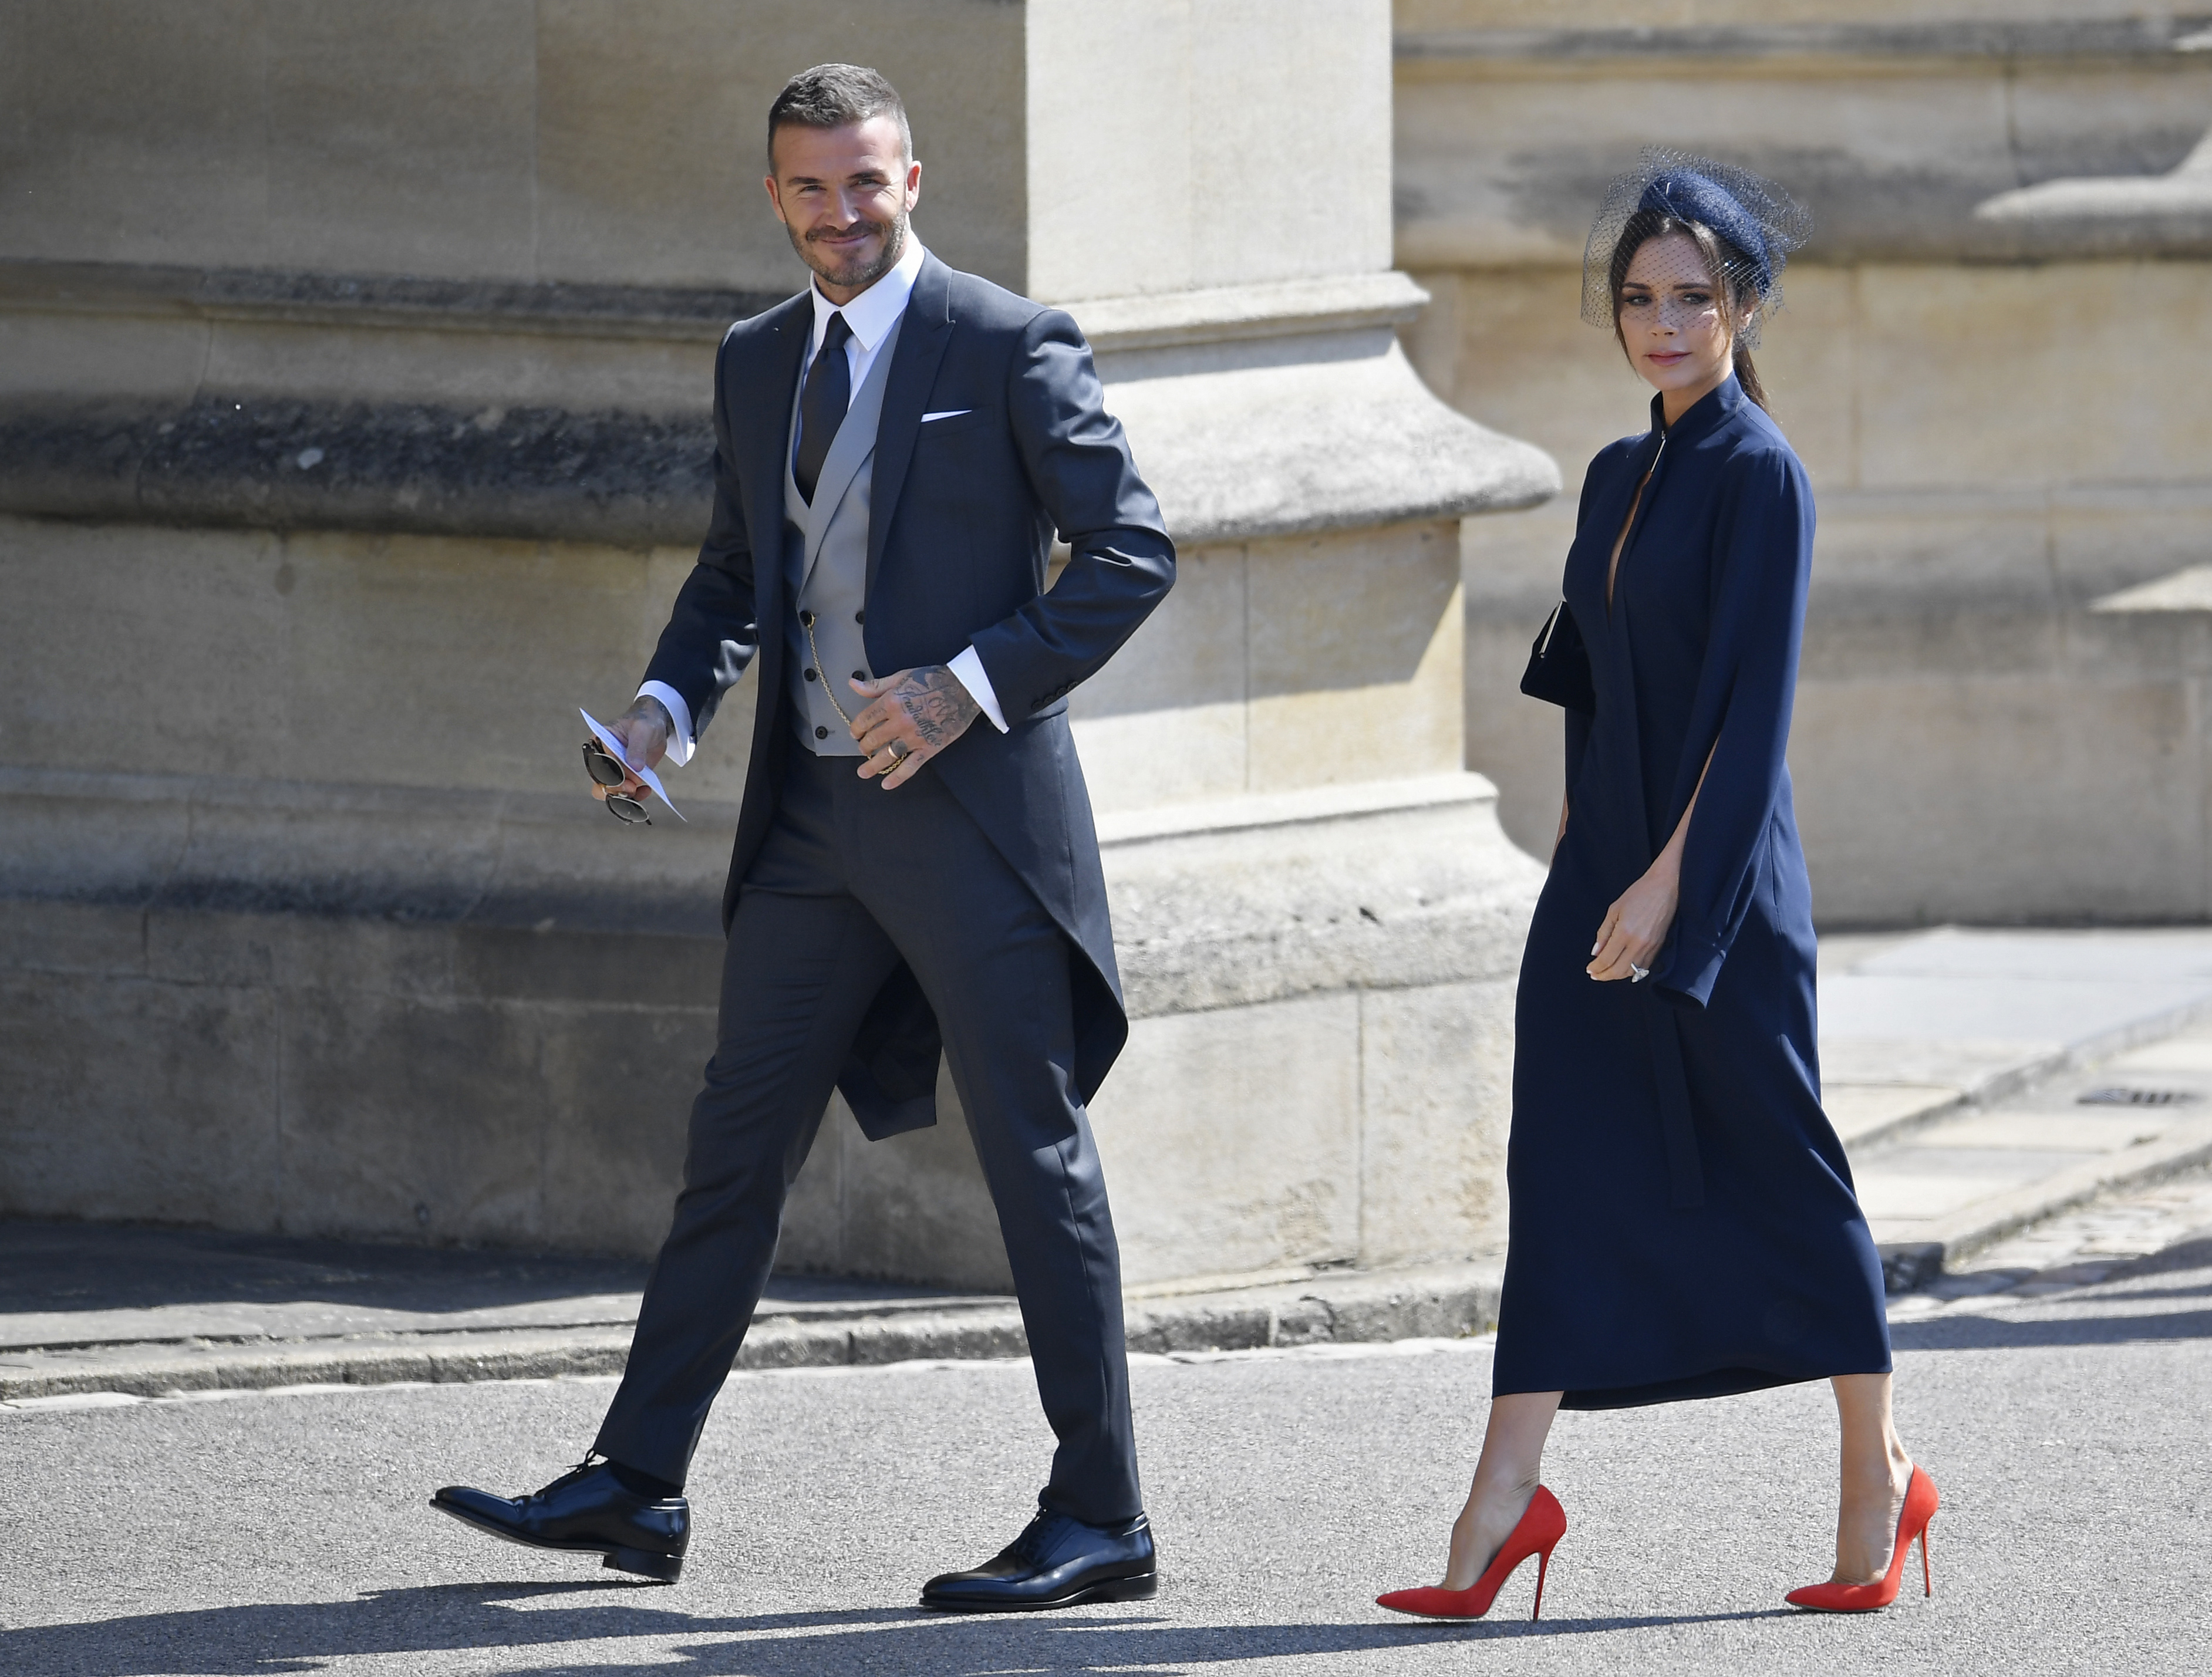 David Beckham broke church etiquette at the Royal Wedding